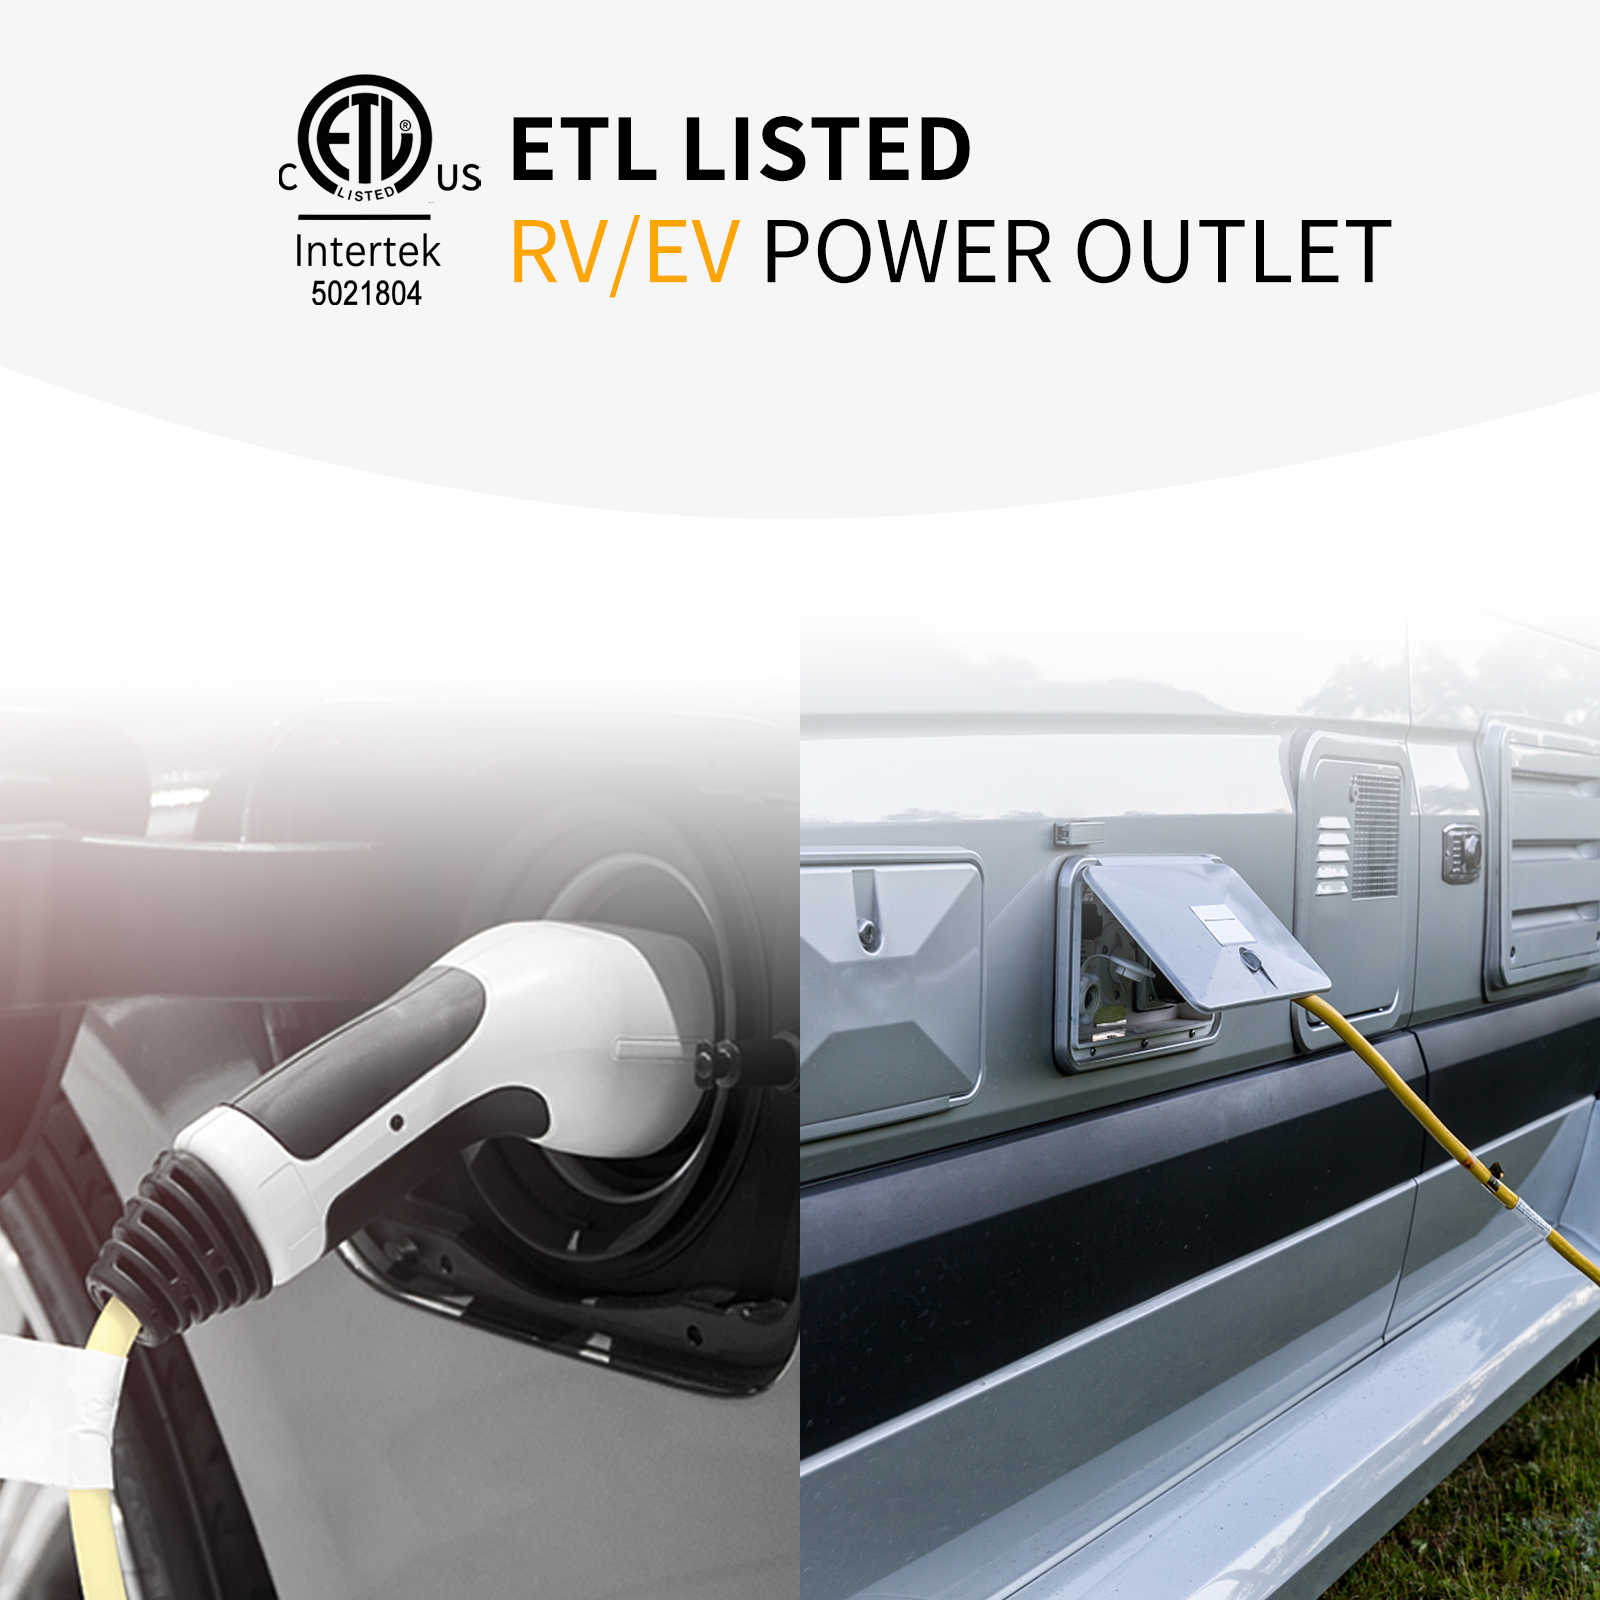 WELLUCK RV Power Outlet Box | 50A 125/250V, NEMA 14-50R Receptacle |  Enclosed & Lockable | Weatherproof Plug for Travel Trailer, RV Camper,  Generator